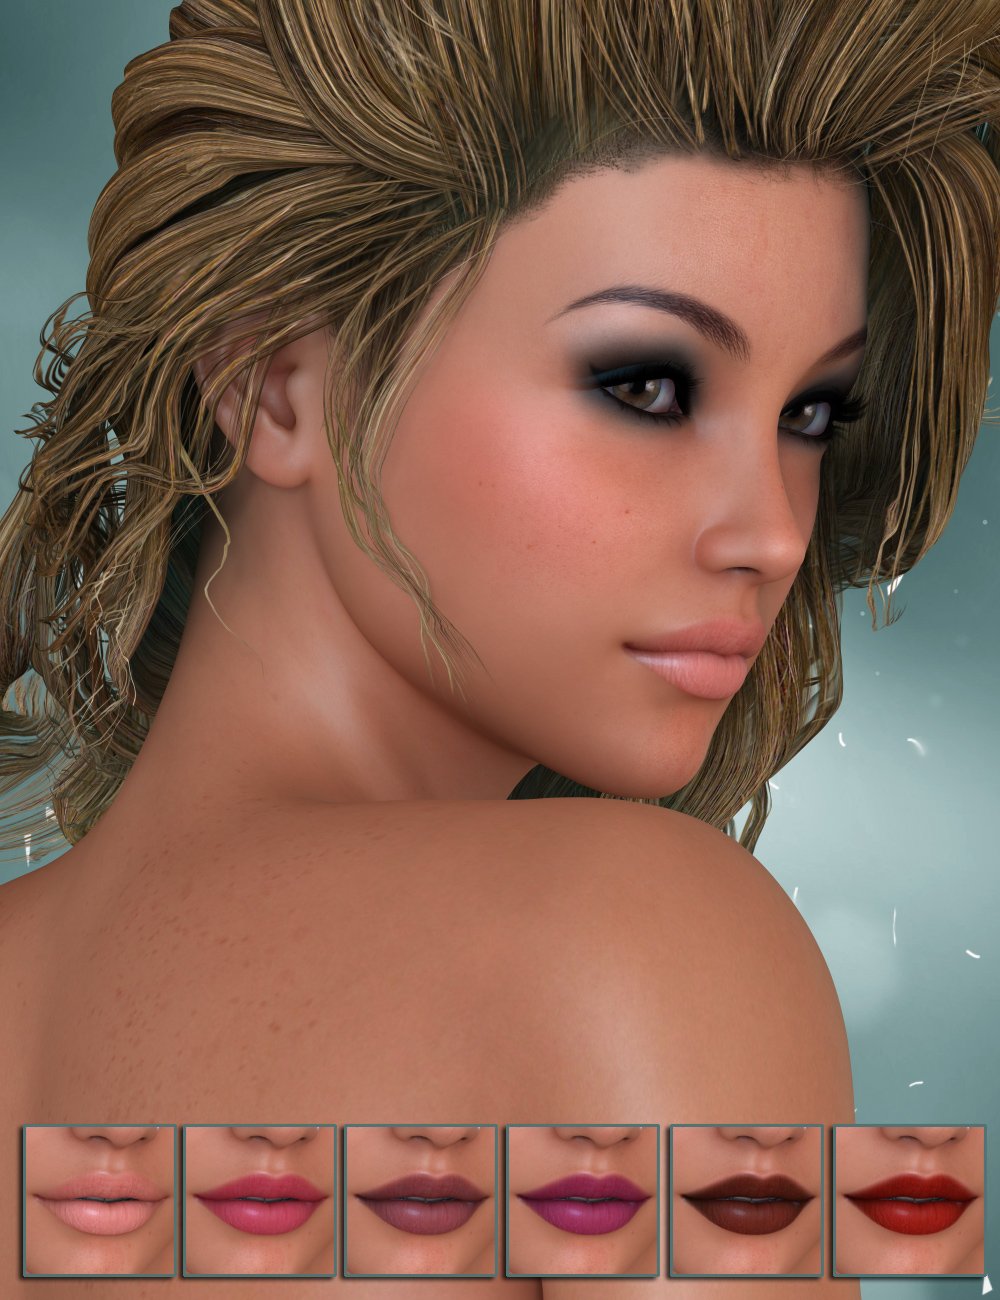 Sigrid for Genesis 2 Female(s) by: Freja, 3D Models by Daz 3D